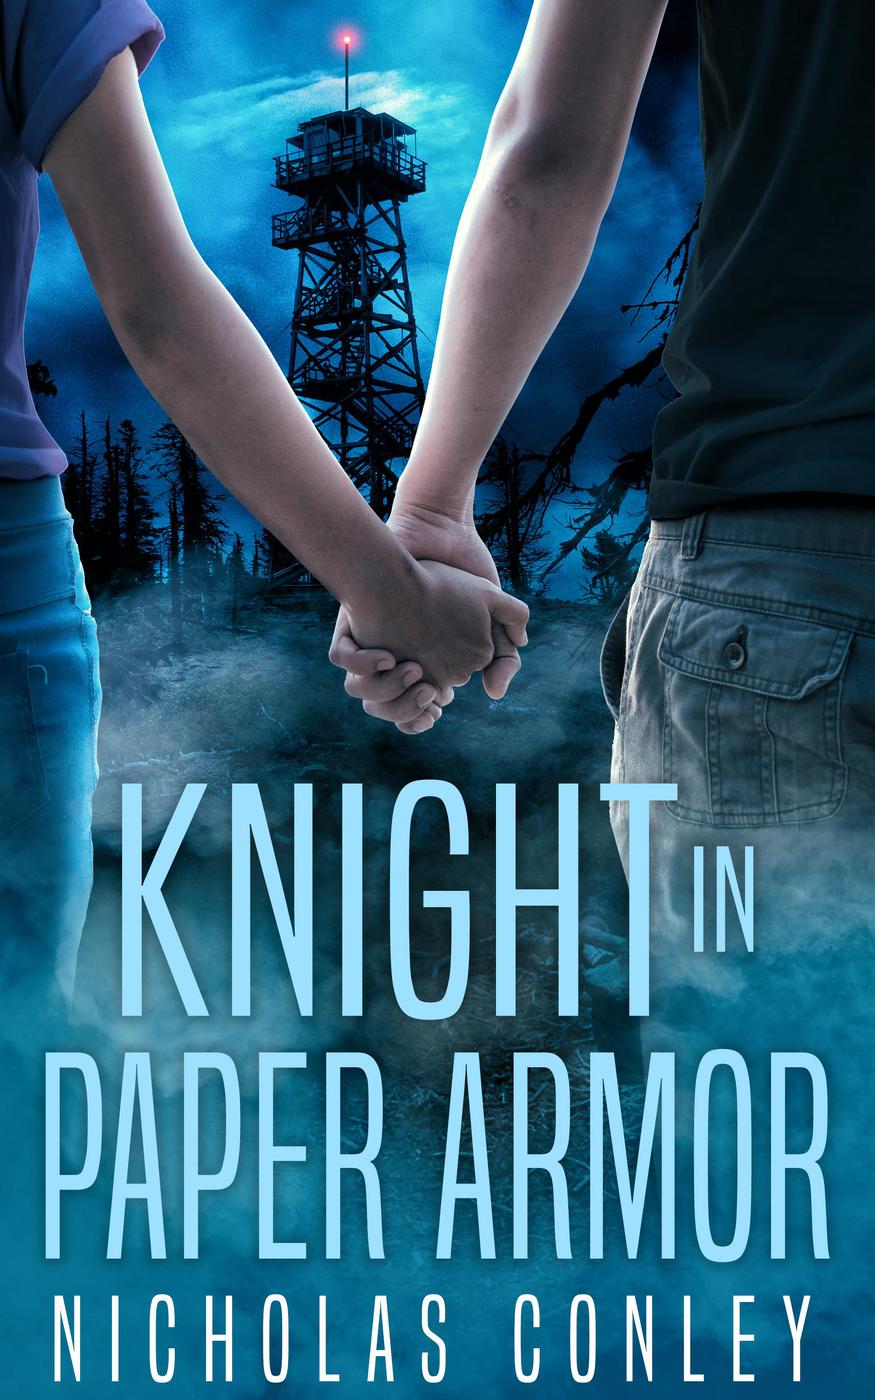 Knight in Paper Armor by Nicholas Conley